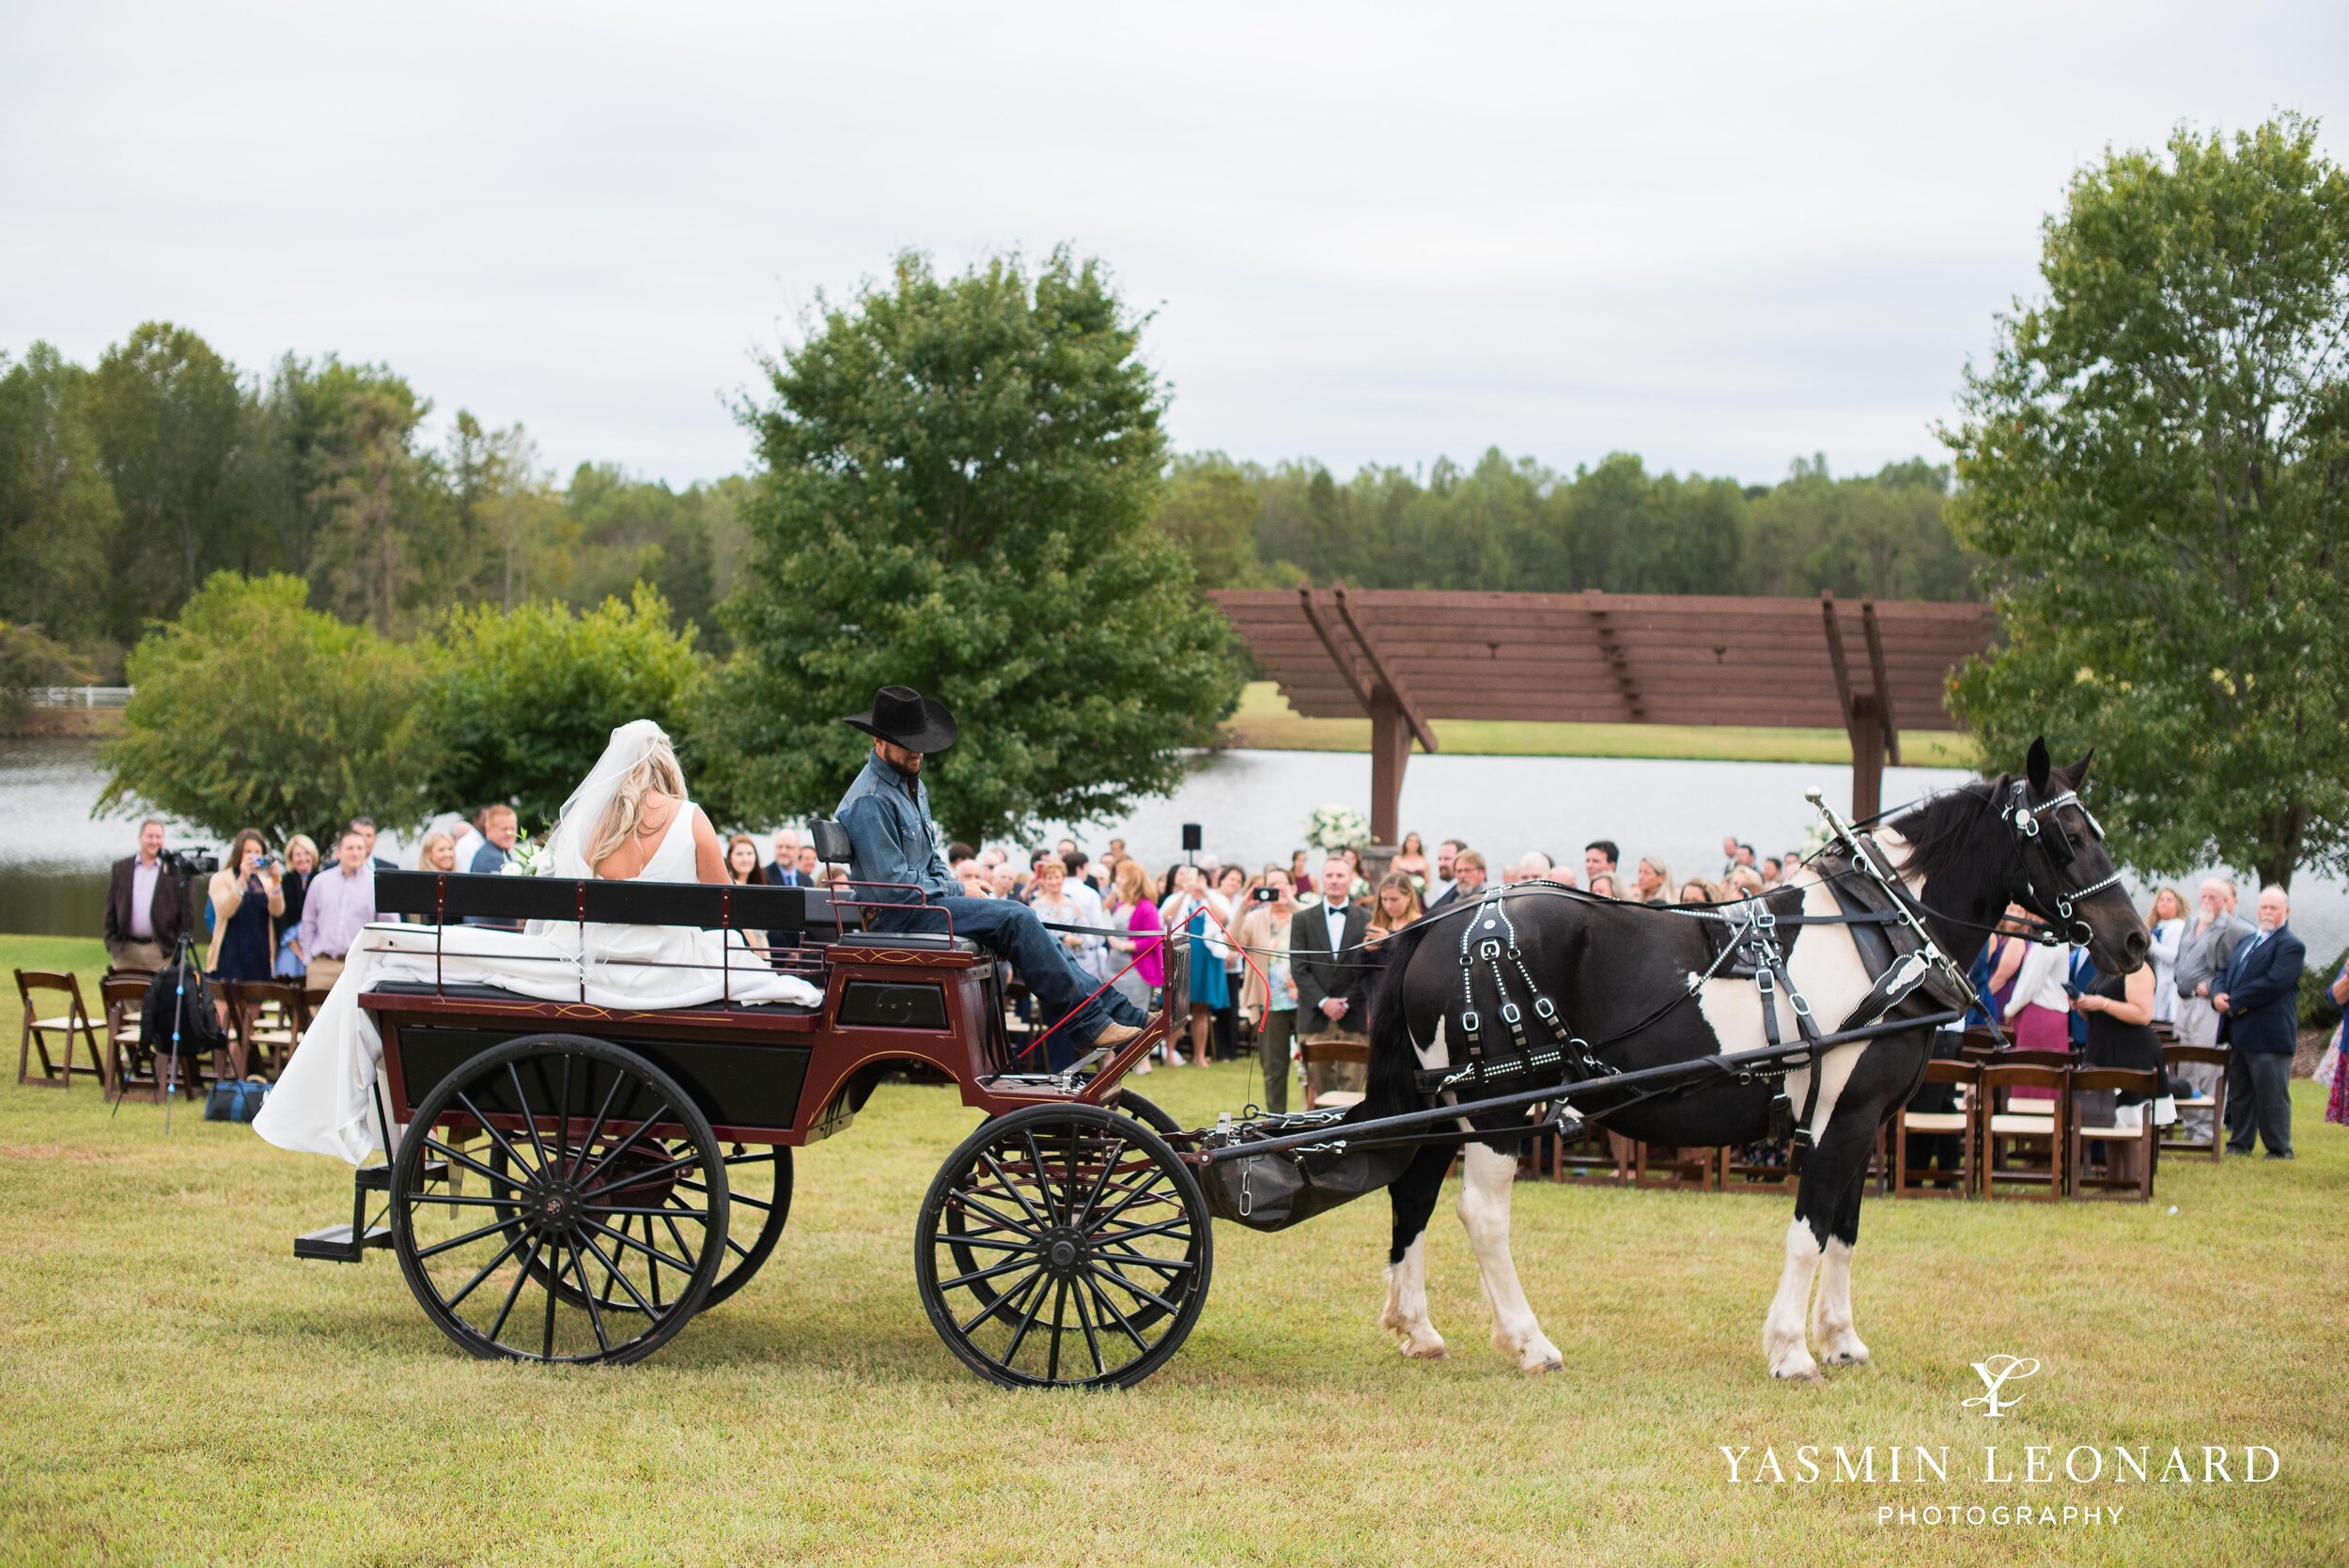 Dan and Nicole - October 5, 2019 - Adaumont - Yasmin Leonard Photography - Horse Carriage Wedding - Adaumont Wedding - High Point Wedding Photographer - Fall Wedding - Fall Wedding Colors-24.jpg